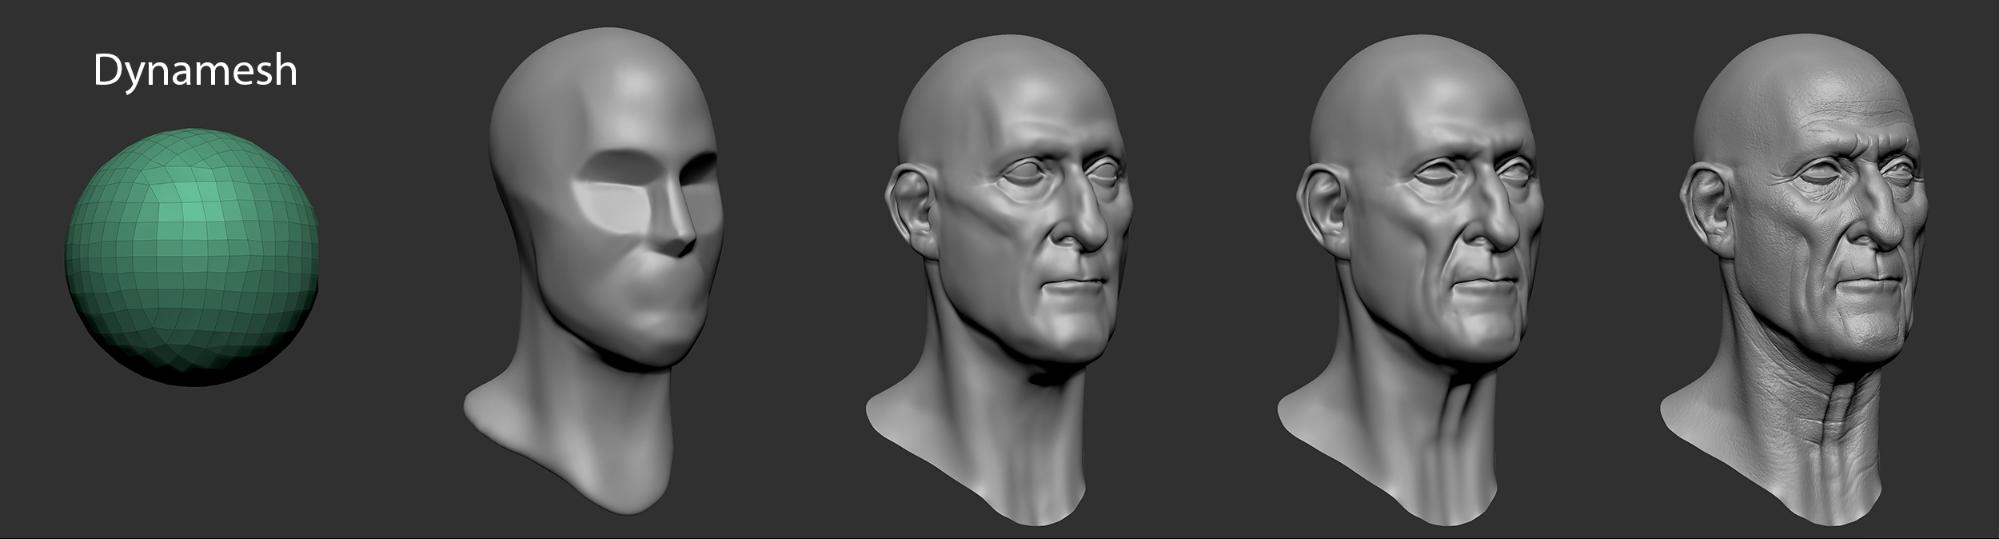 Realistic Facial Features in 3D Character Sculpts